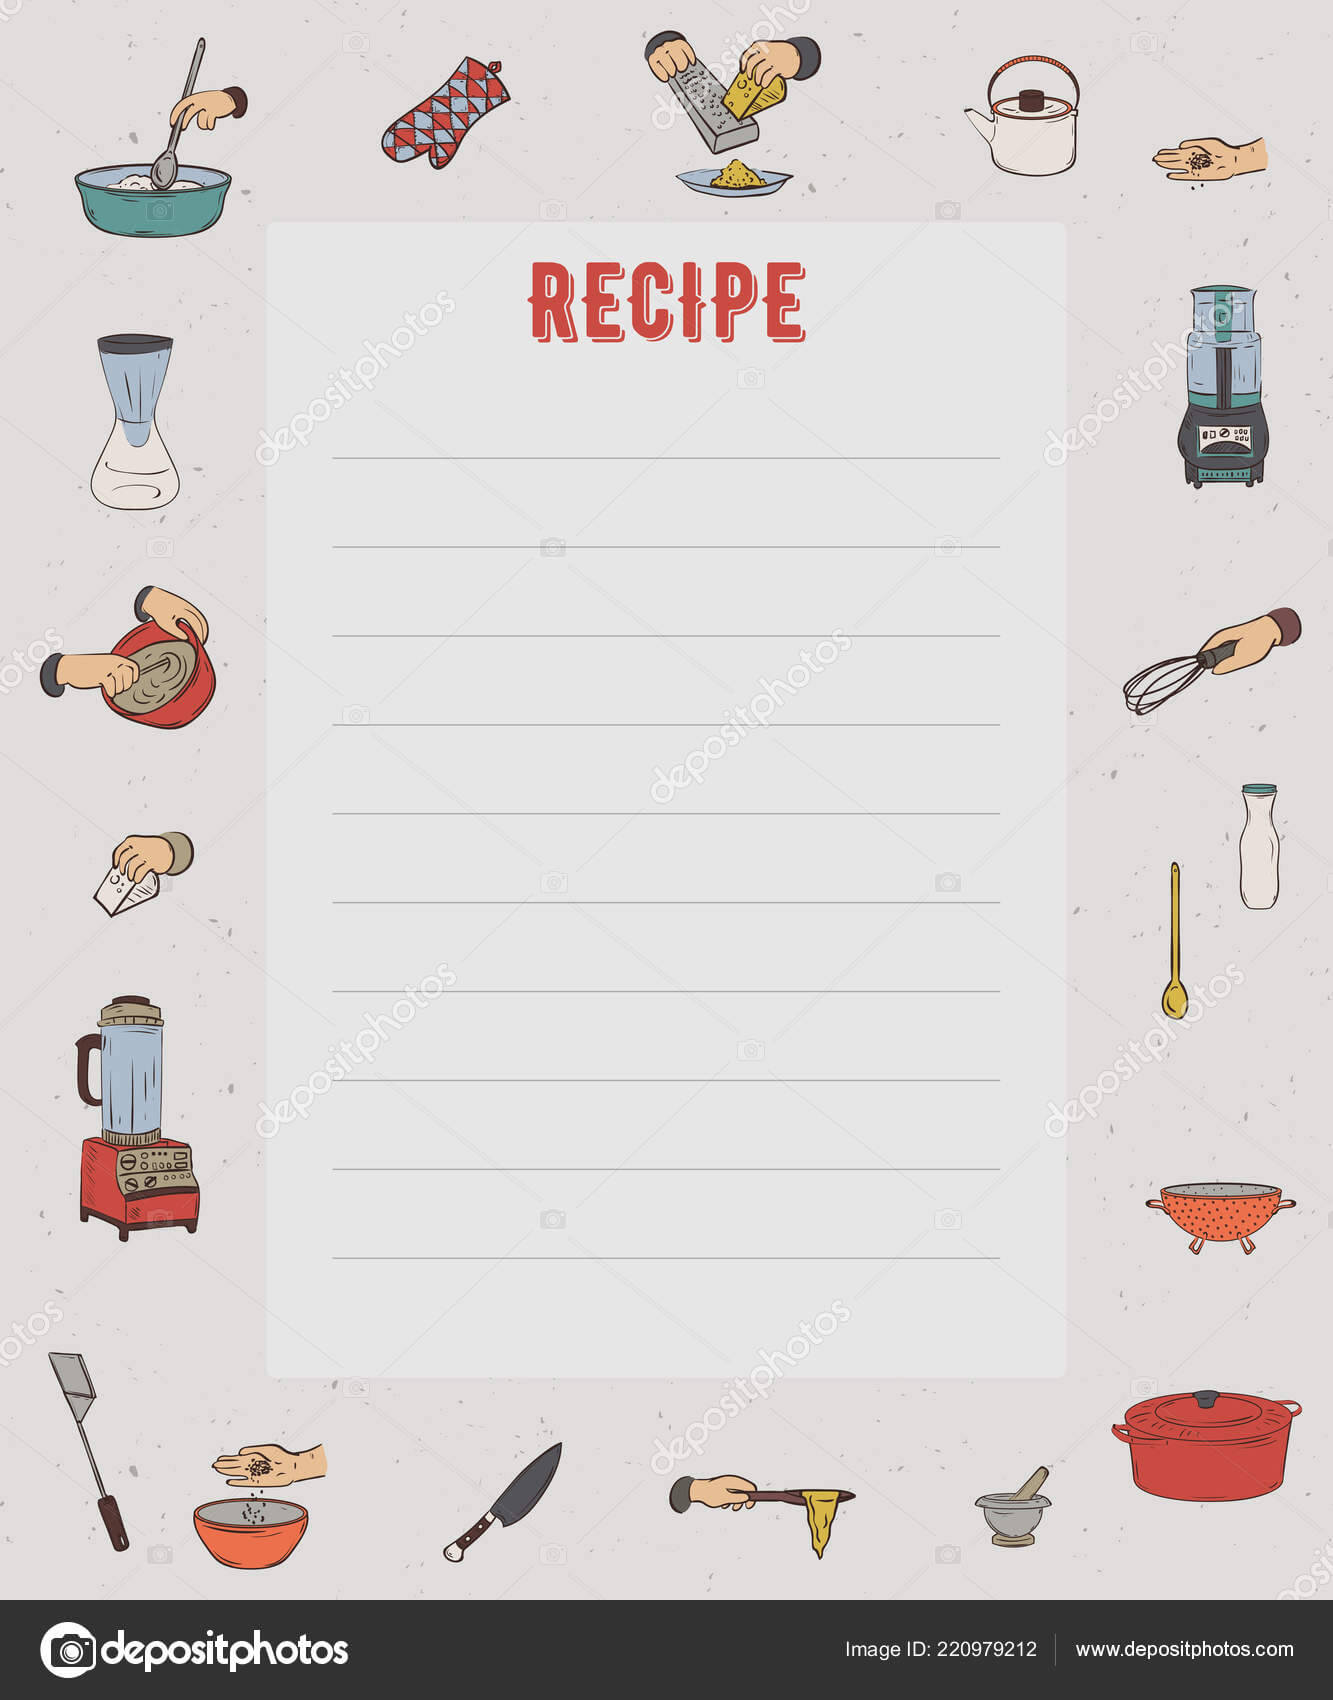 Recipe Card Cookbook Page Design Template Kitchen Utensils With Regard To Restaurant Recipe Card Template